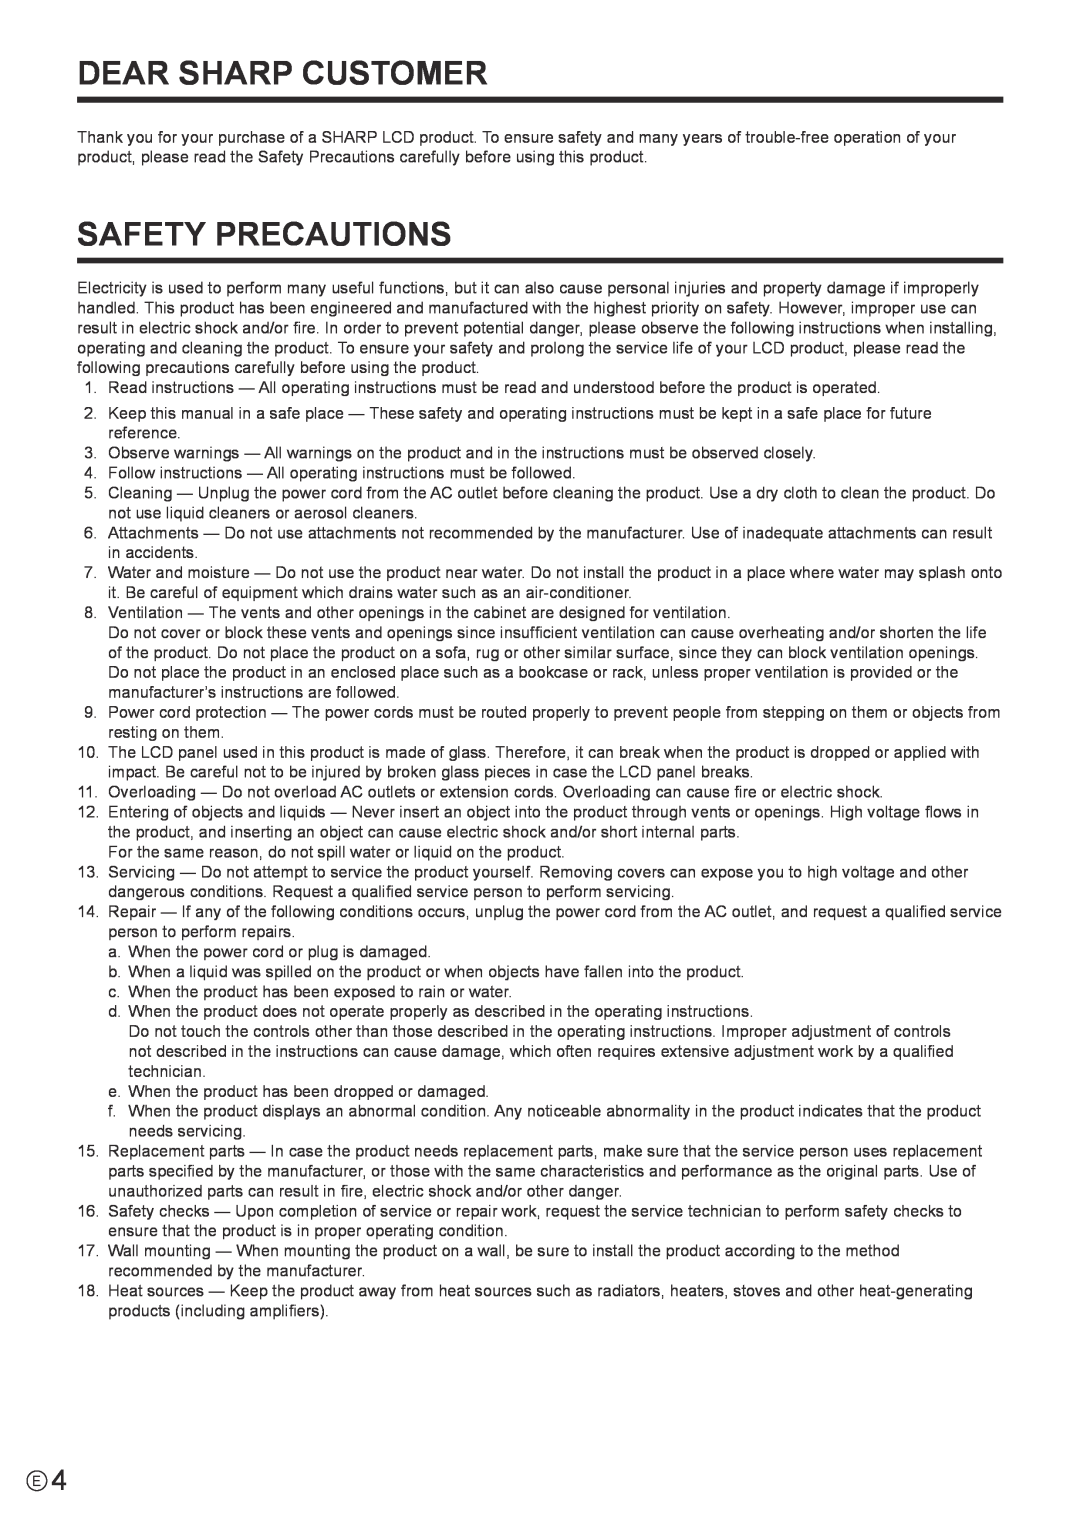 Sharp PN-Y475, PN-Y555, PN-Y425 operation manual Dear Sharp Customer, Safety Precautions 